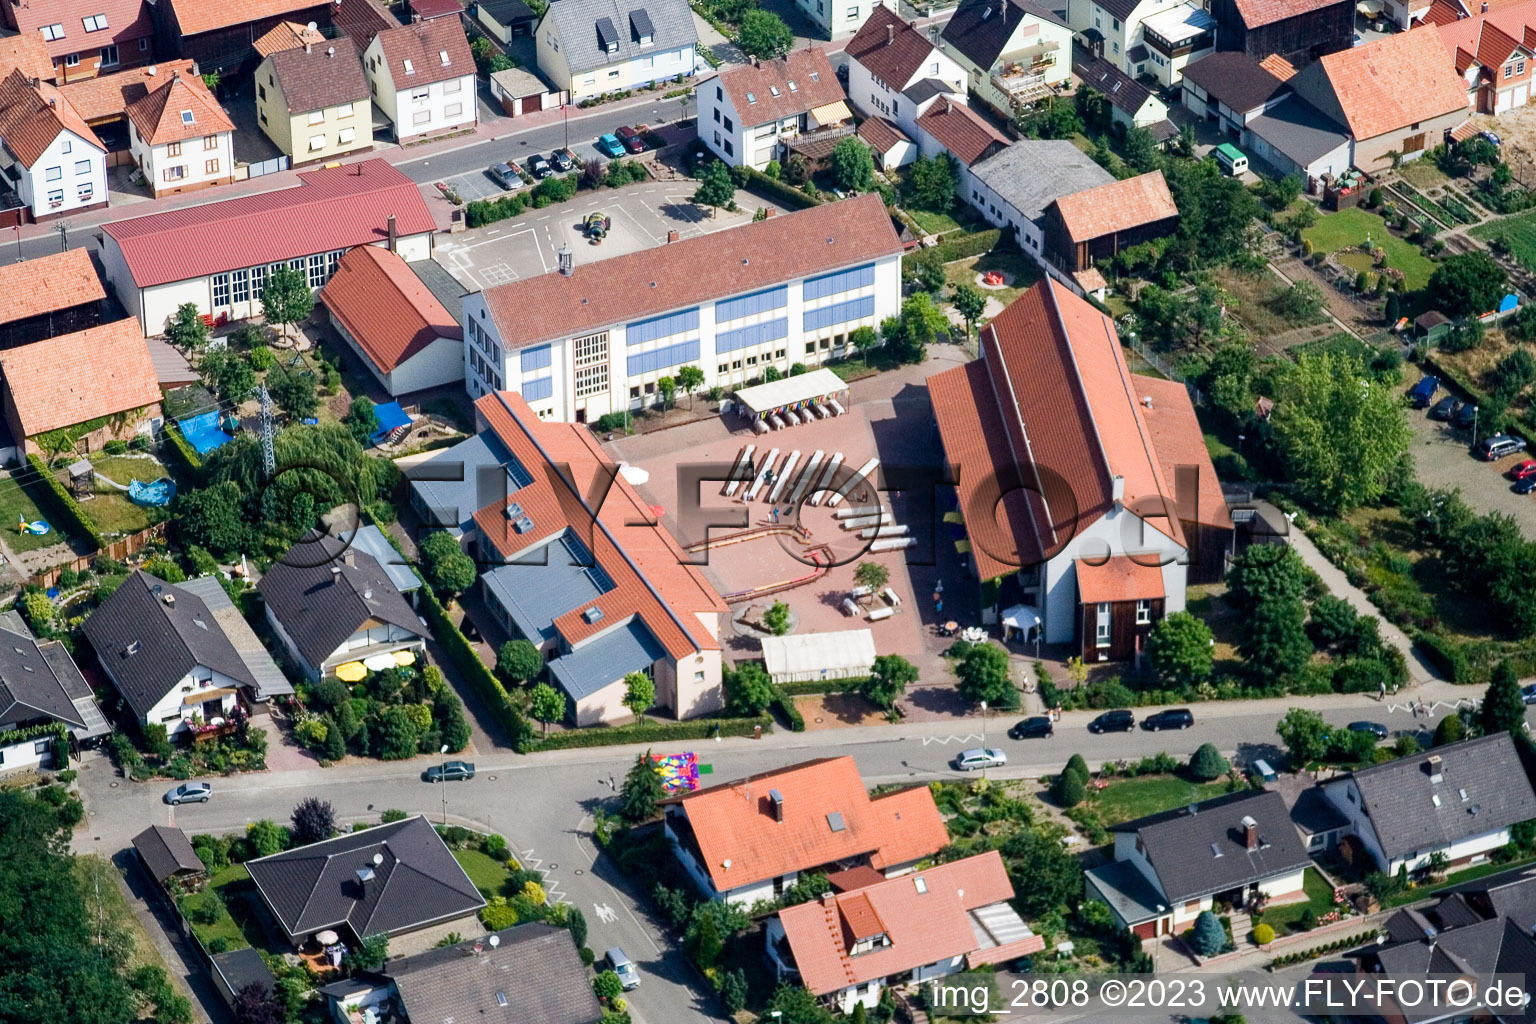 School in Hatzenbühl in the state Rhineland-Palatinate, Germany